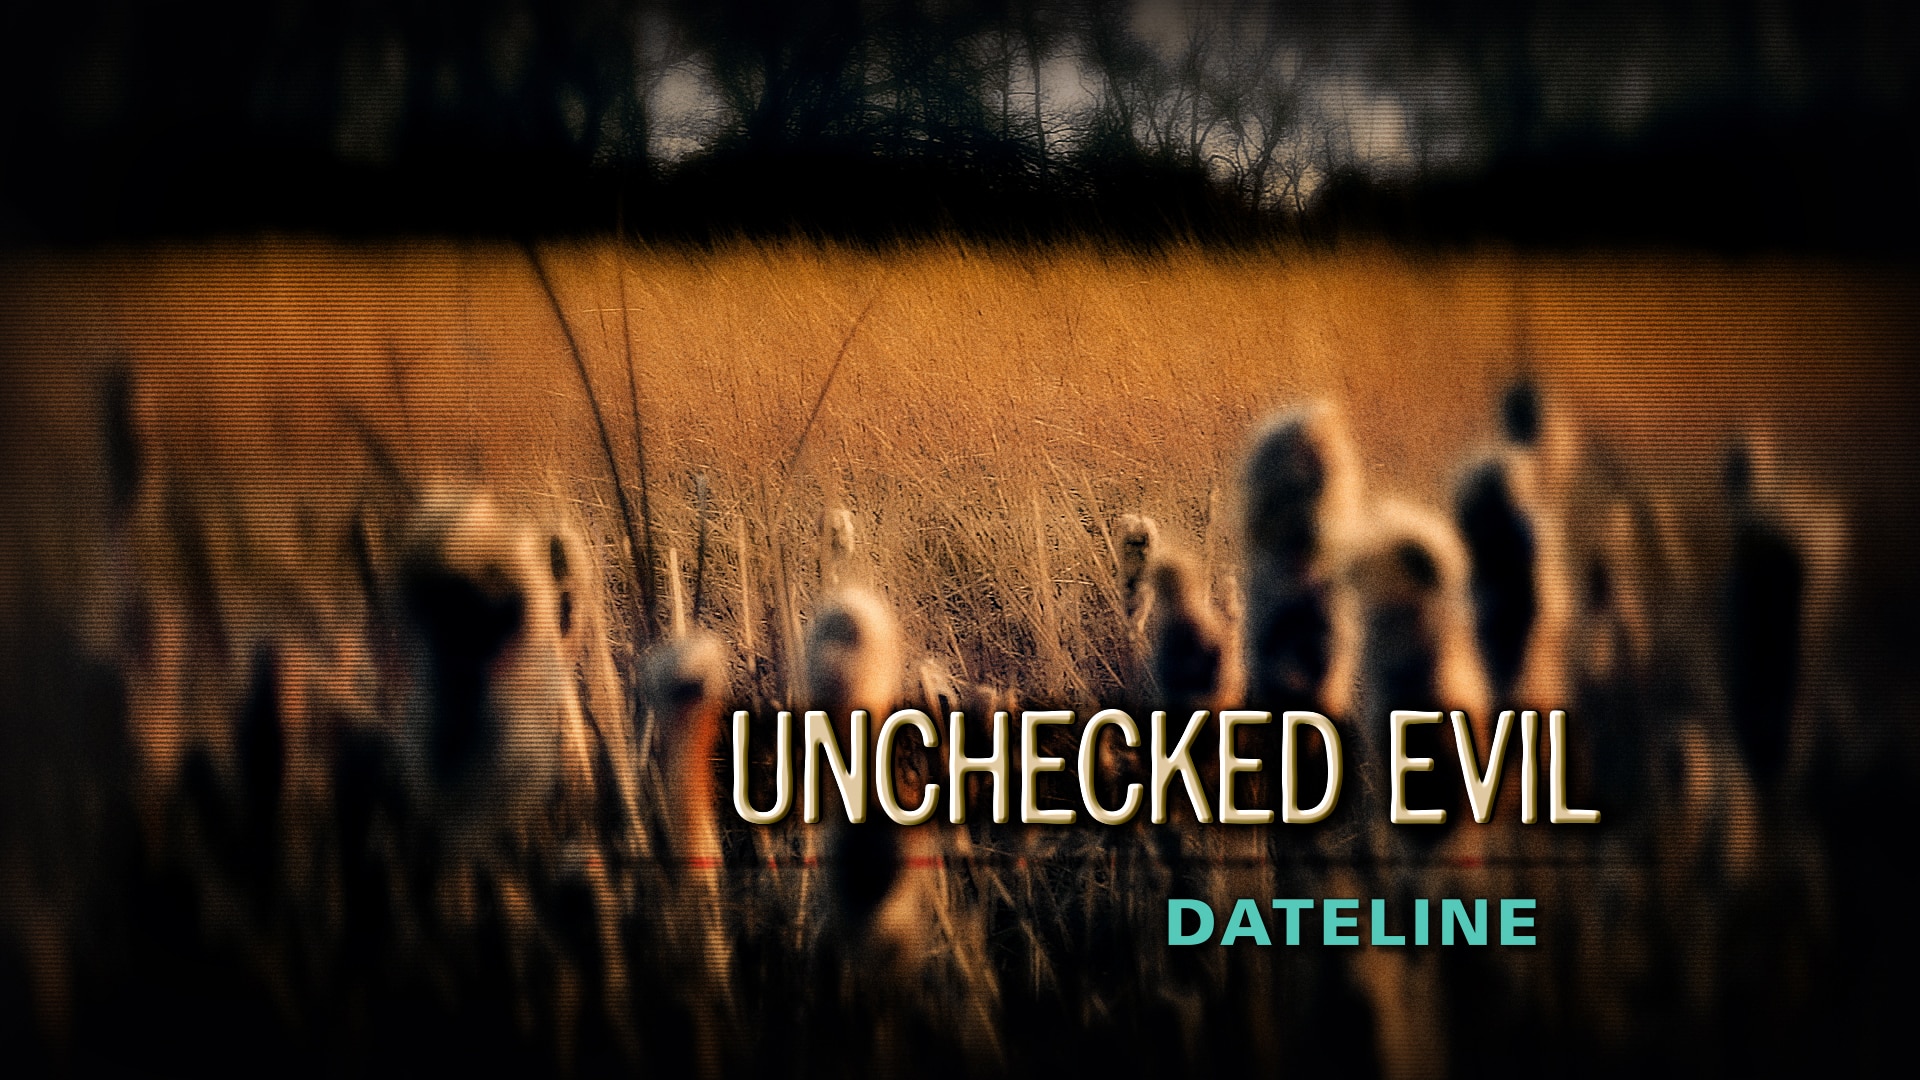 Watch Dateline Episode: Unchecked Evil - NBC.com